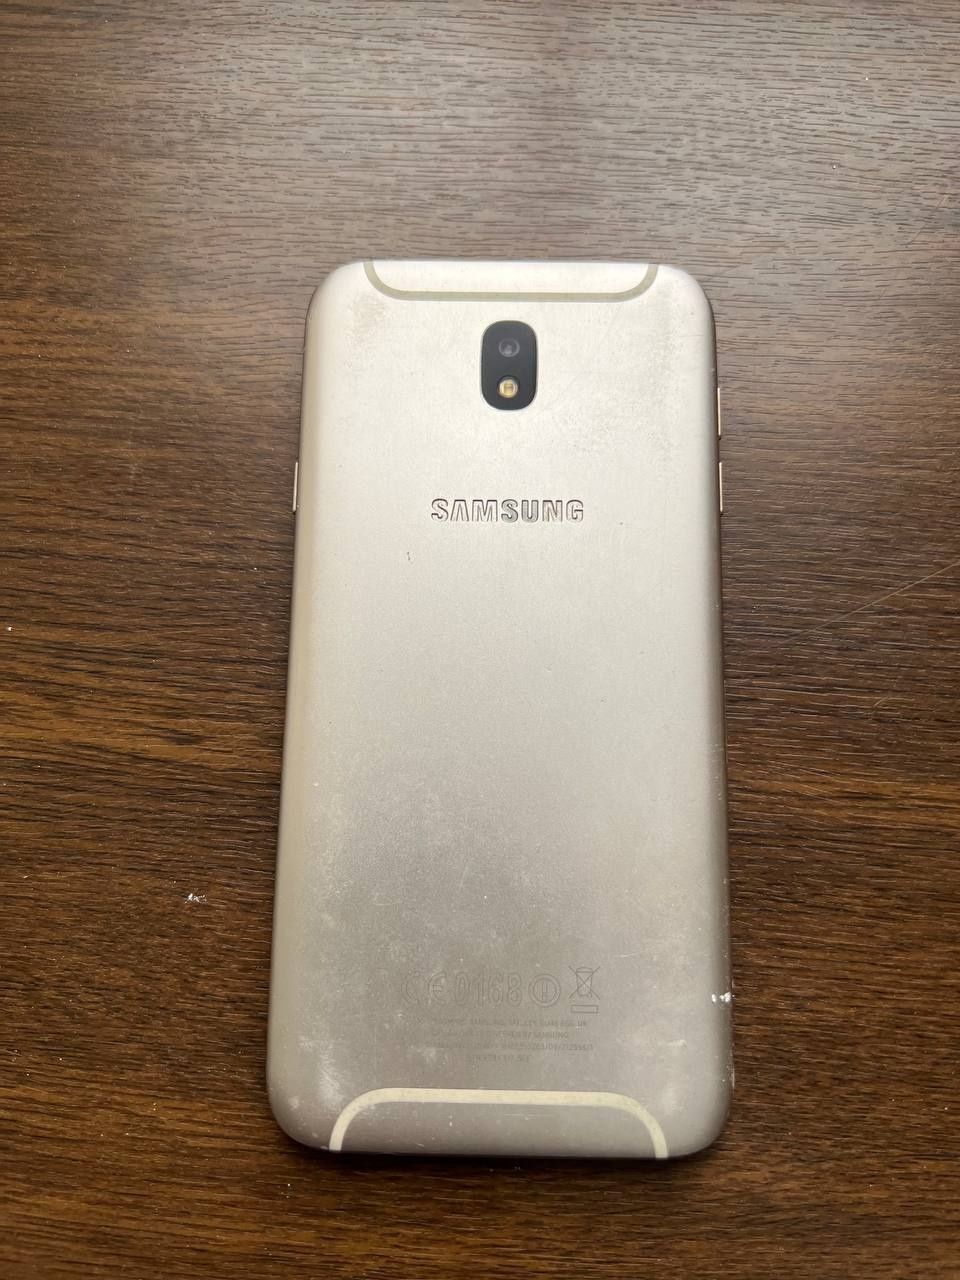 Samsung Galaxy J7 PRO